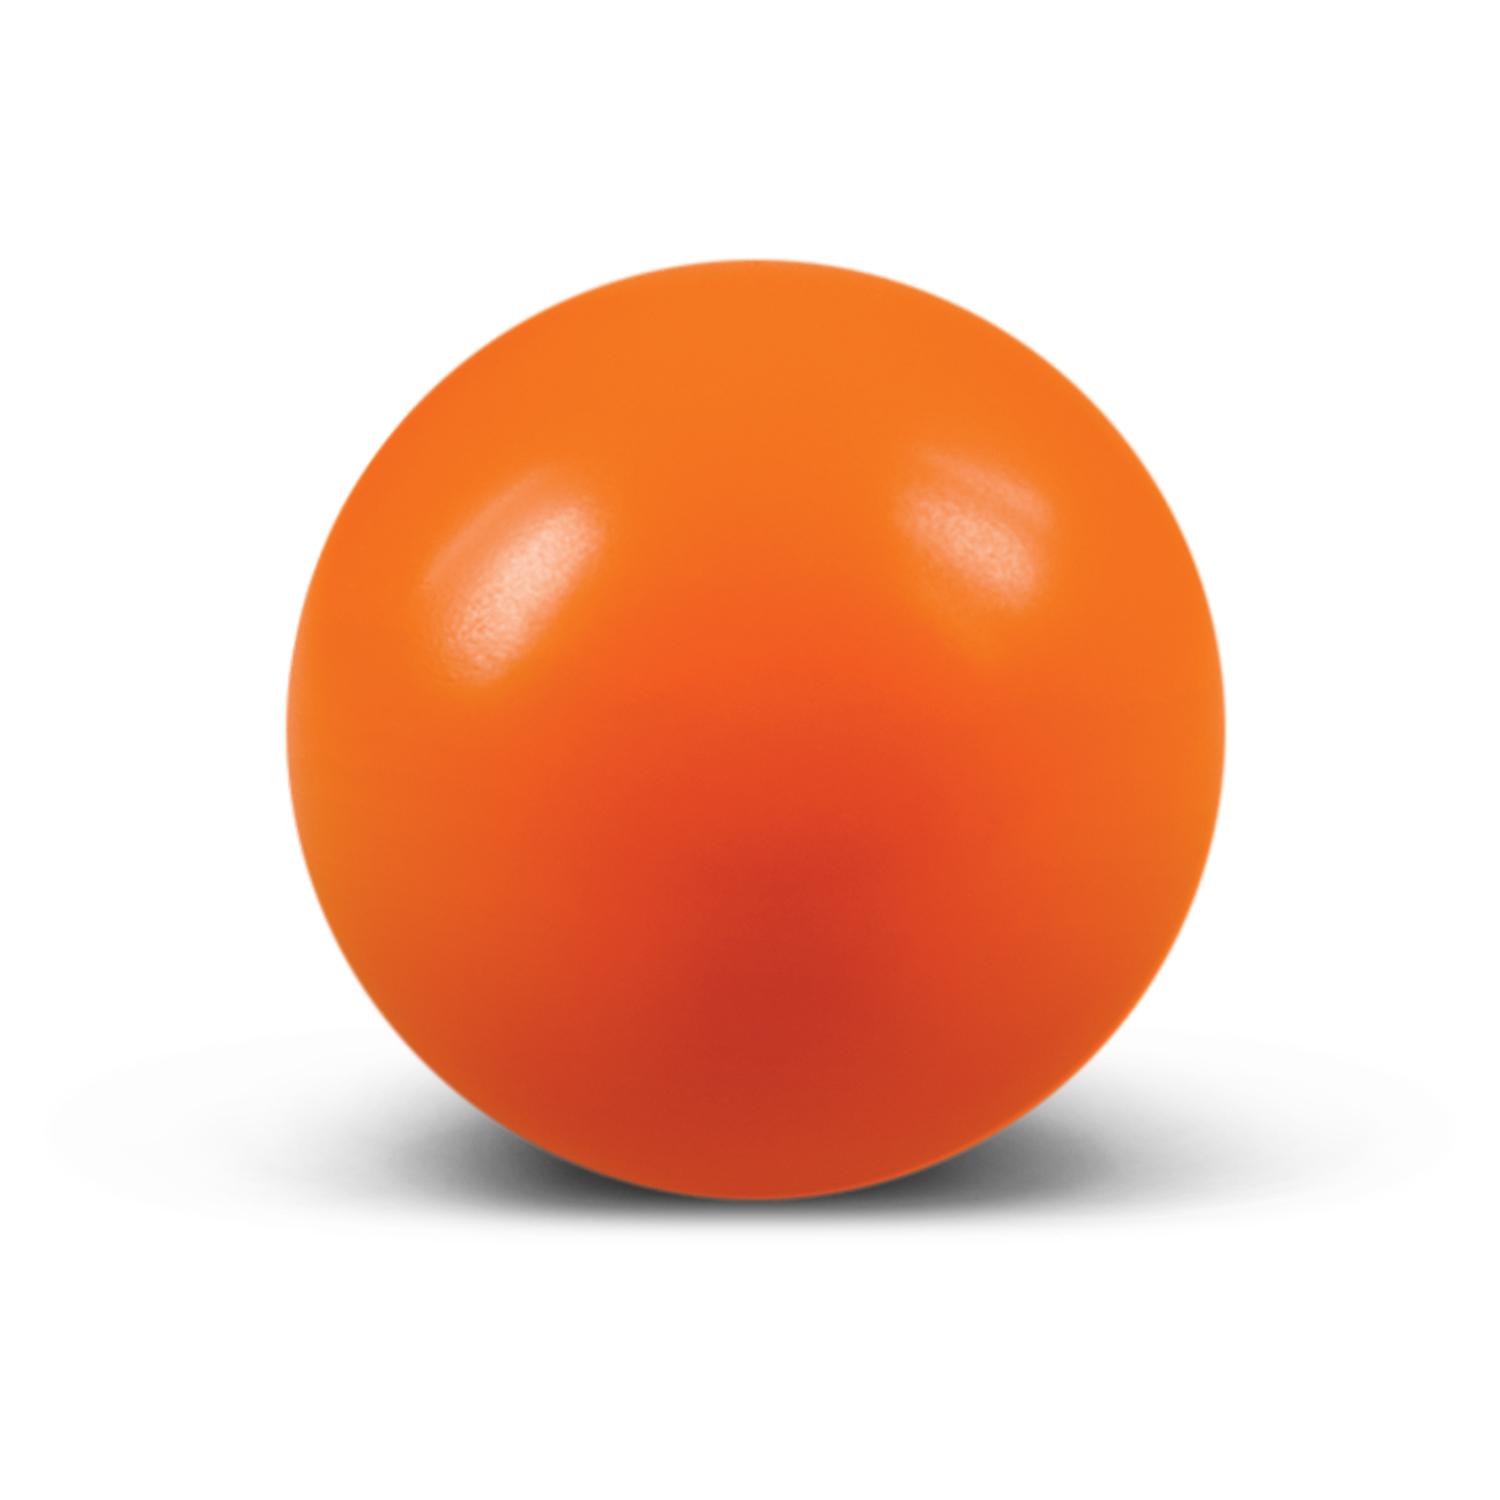 Round ball. Мяч оранж. Stress Ball. Ball Aarnio. Стресс шар красный.